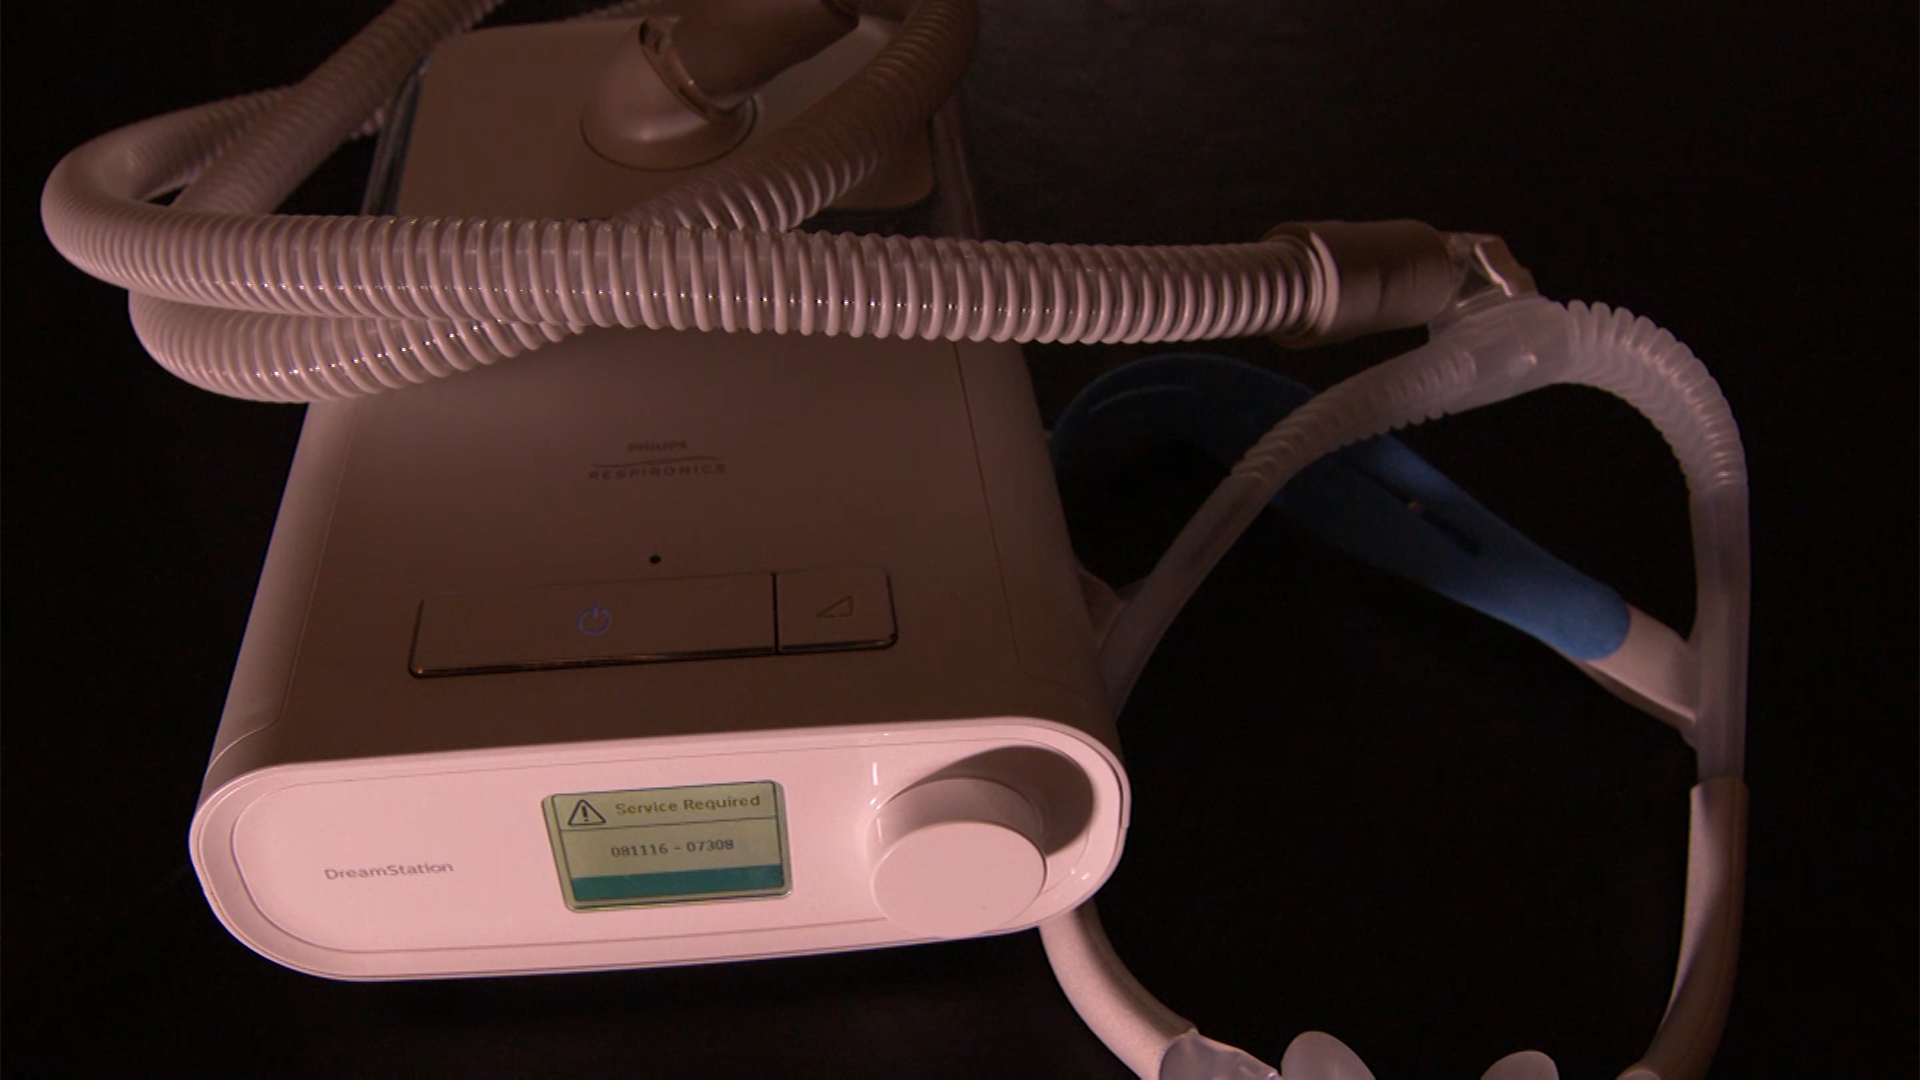 Advocates Demand Solutions For Sleep Apnea Patients Following Massive Device Recall – NBC Chicago